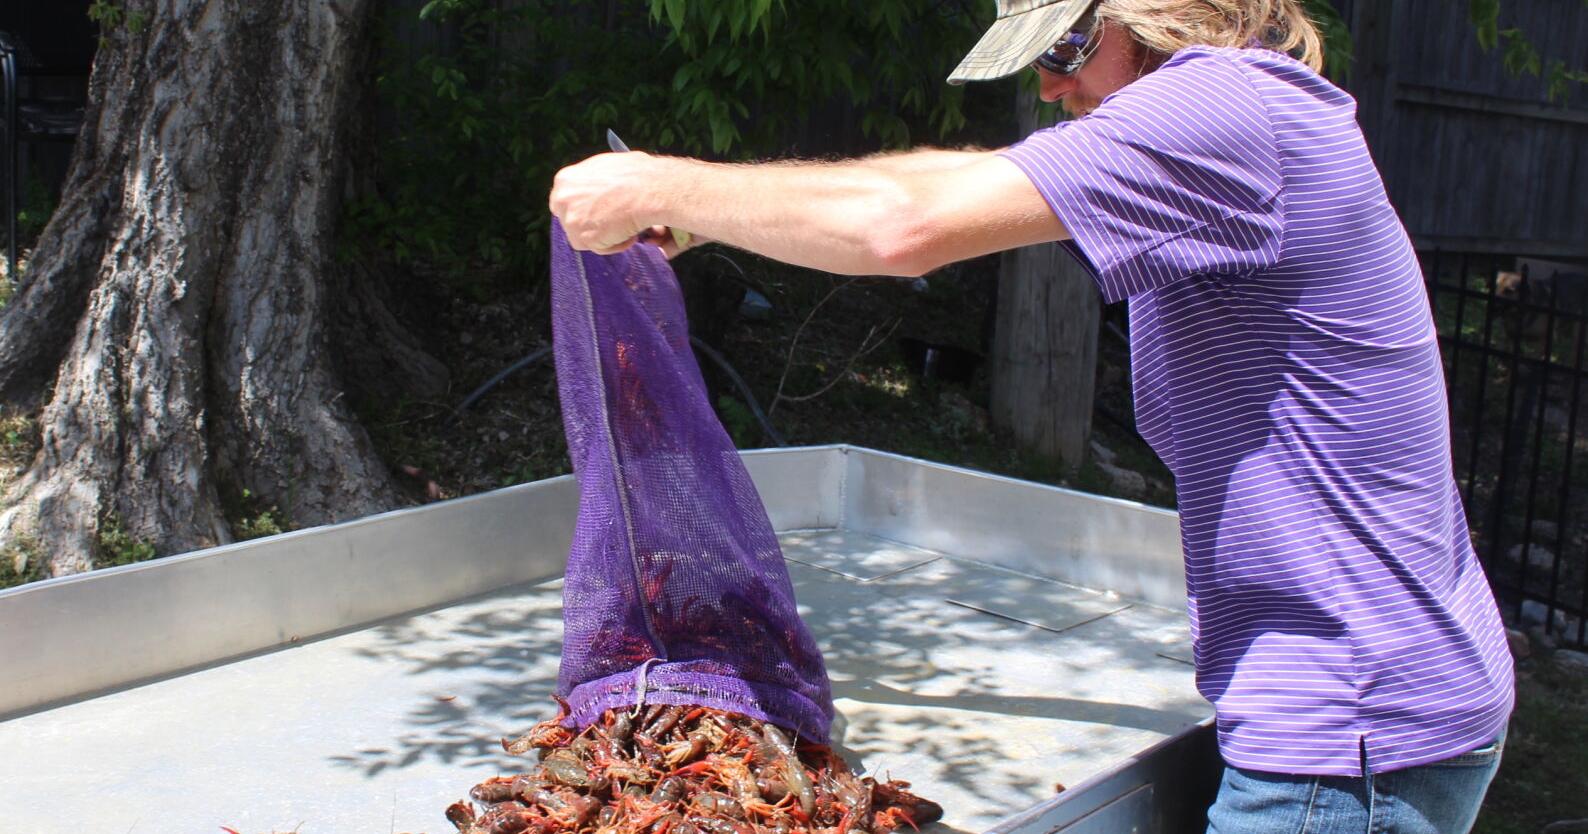 MUDBUGS GALORE: Crawfish Festival brings Louisiana flair to Tahlequah